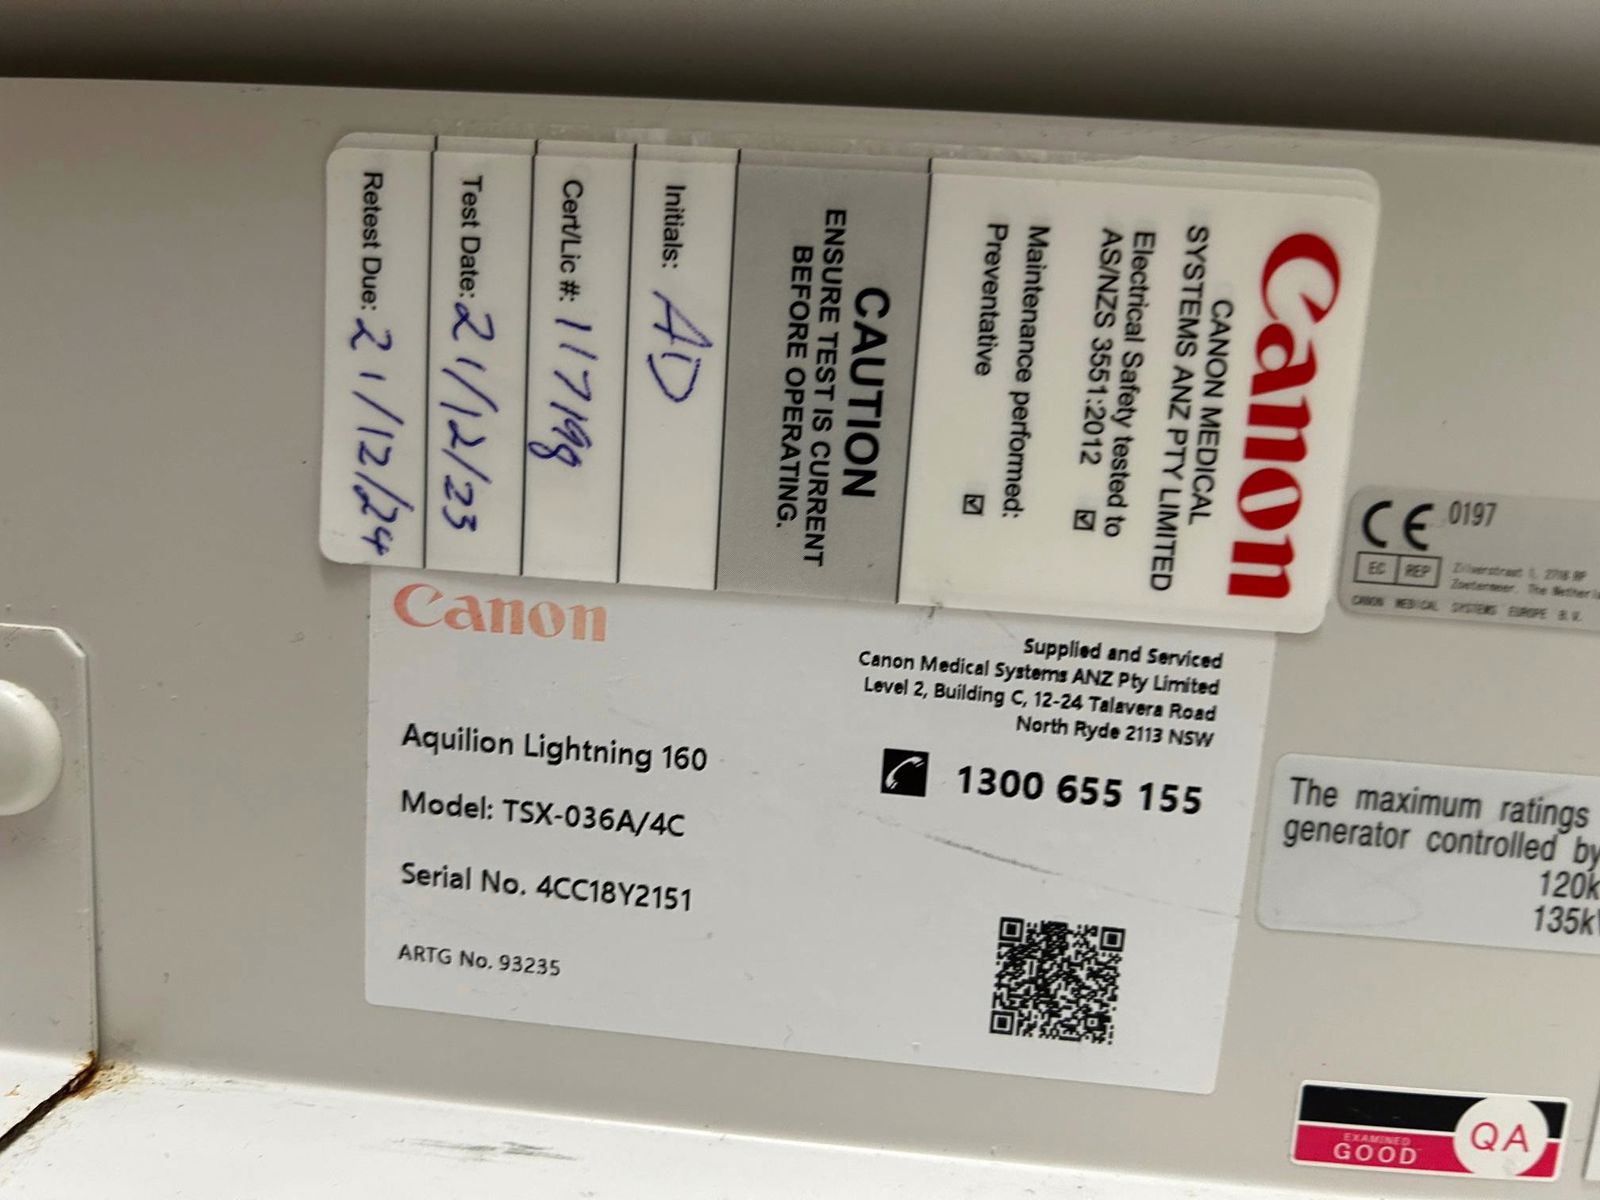 Canon Aquilion Lightning 160 - 2018